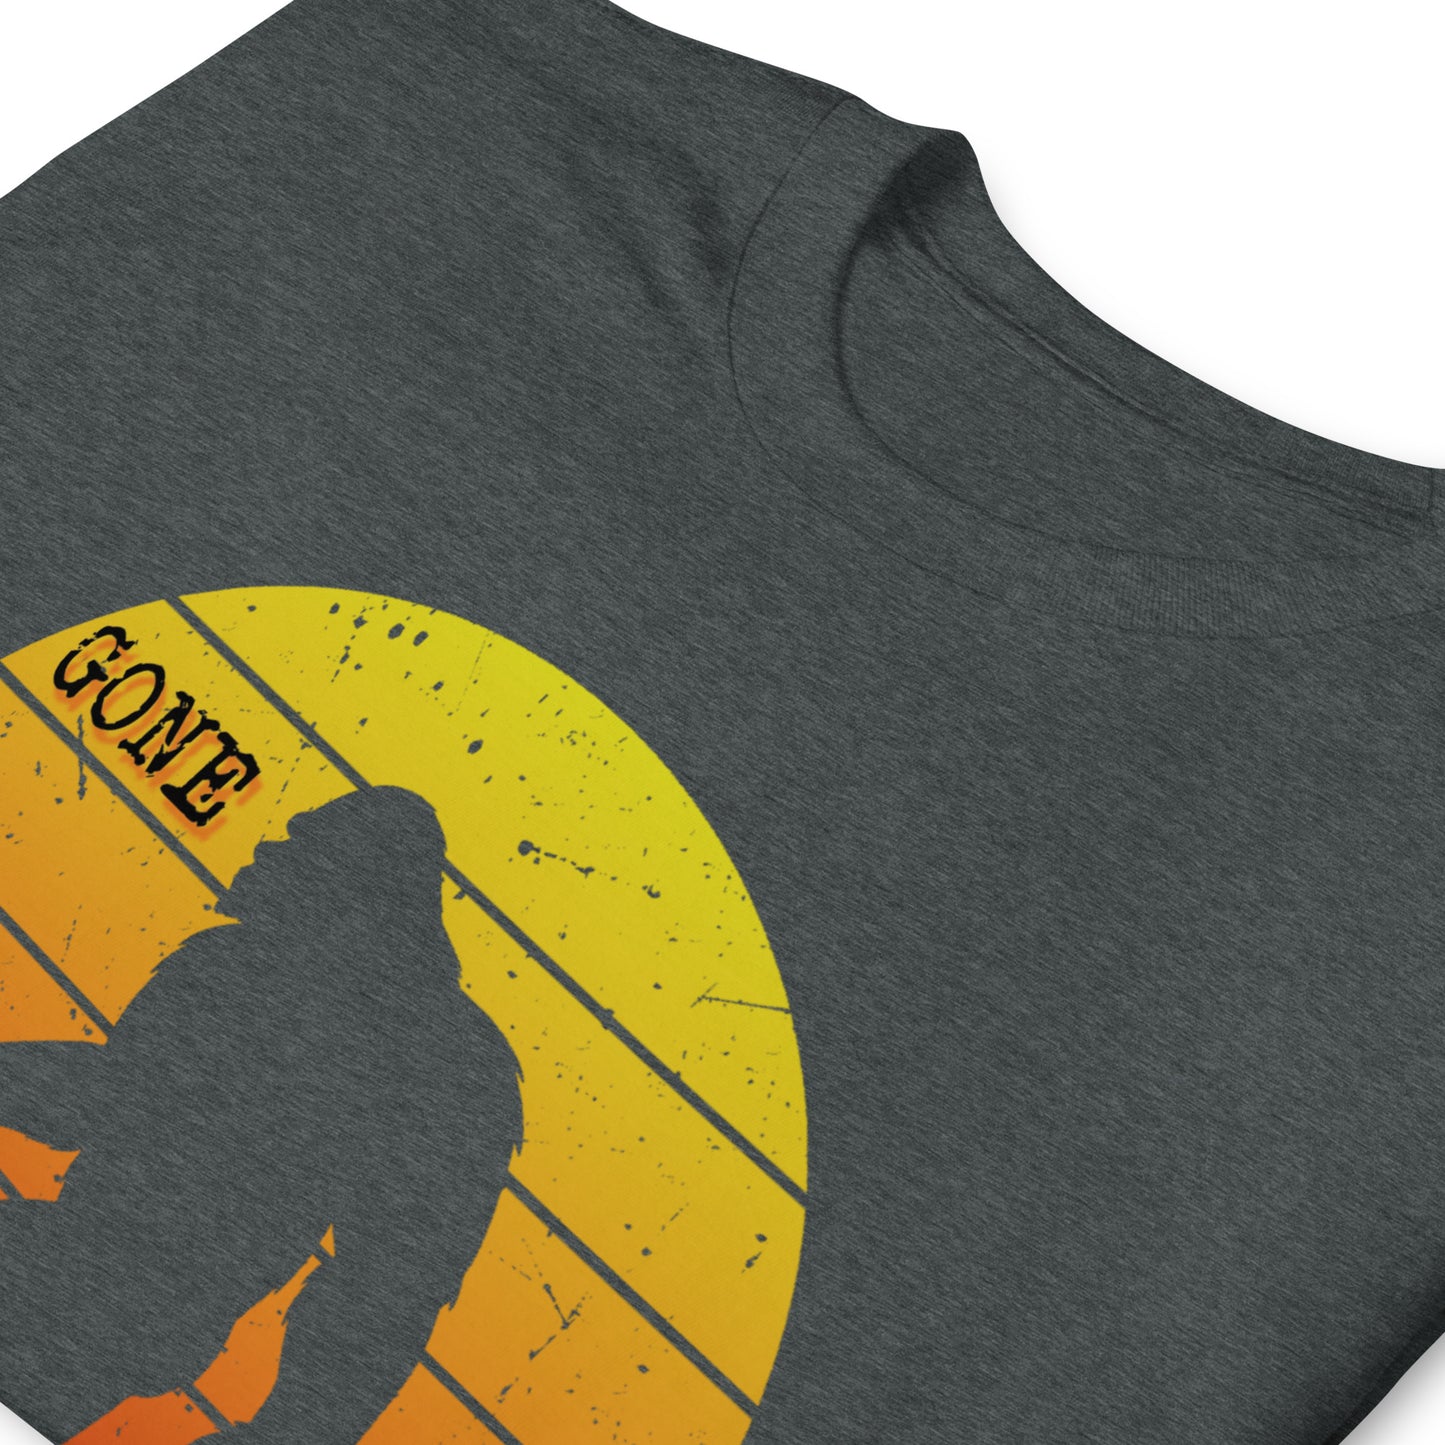 Bigfoot Gone Squatchin Unisex T-Shirt